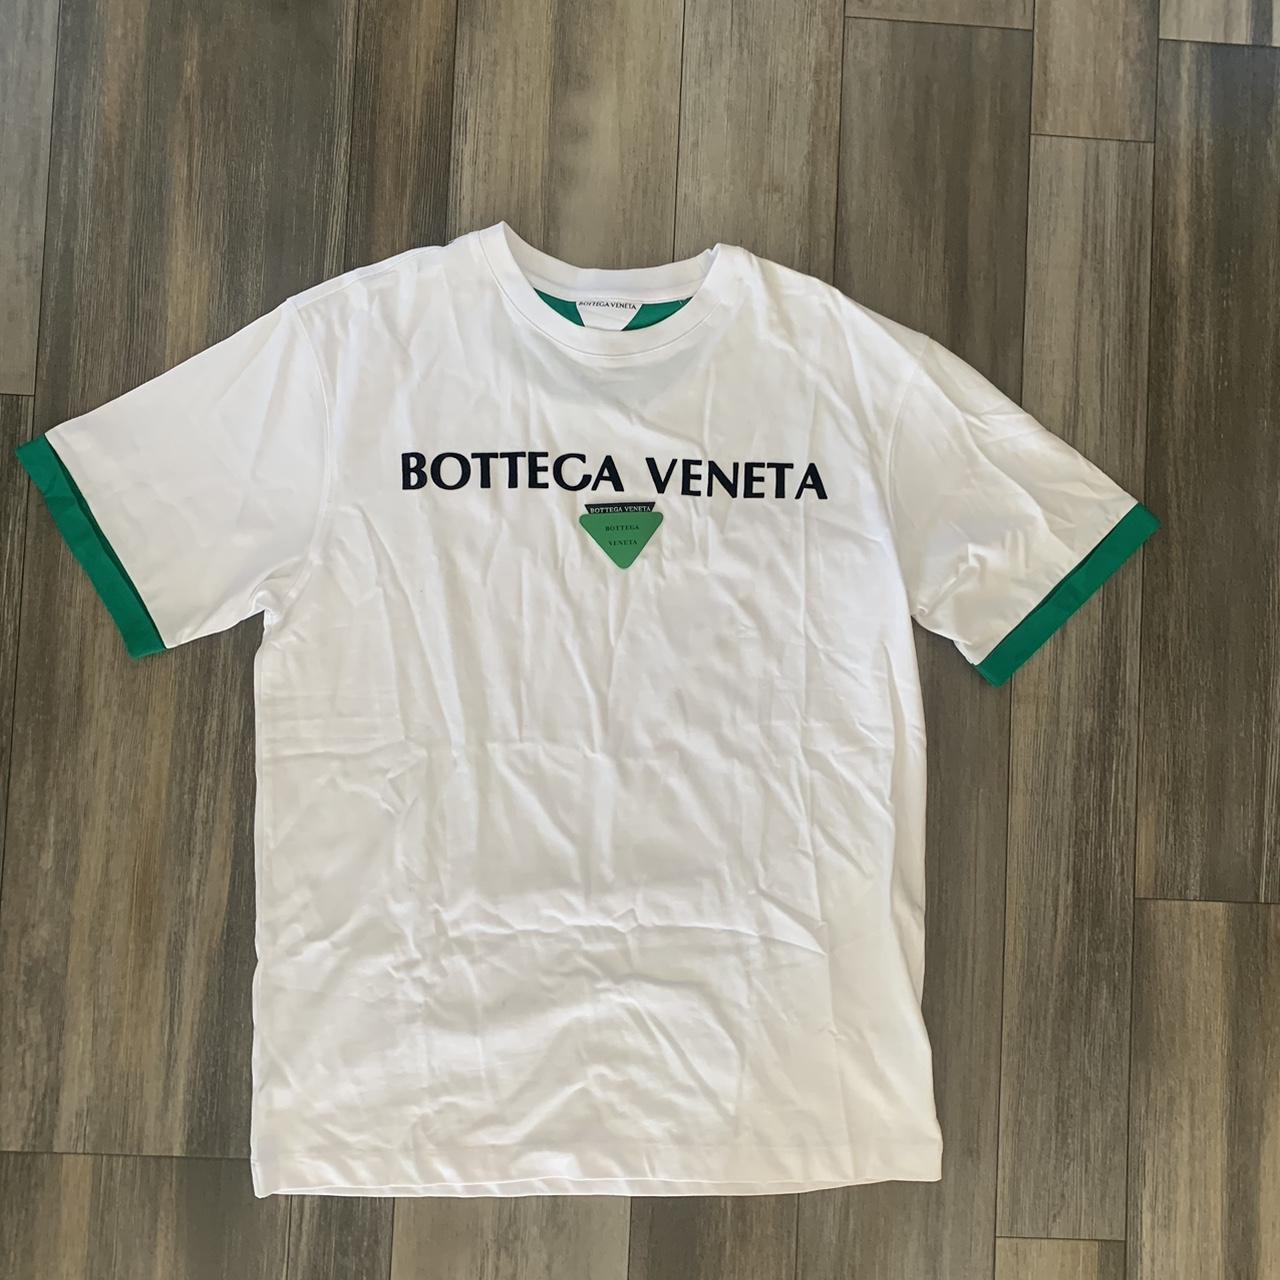 BOTTEGA VENETA, Men's T-shirt